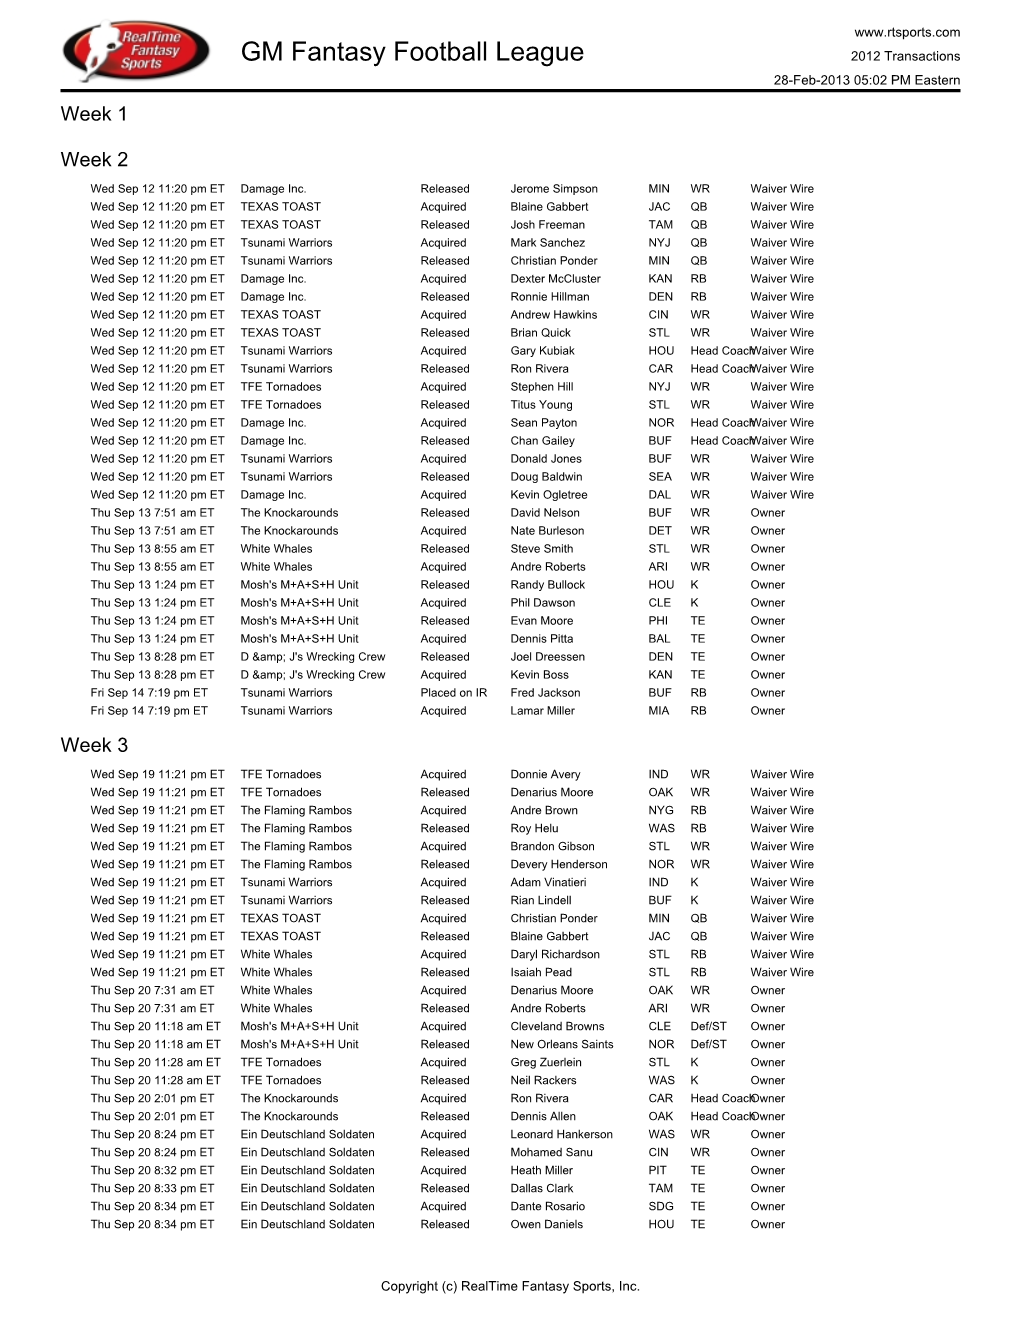 GM Fantasy Football League 2012 Transactions 28-Feb-2013 05:02 PM Eastern Week 1